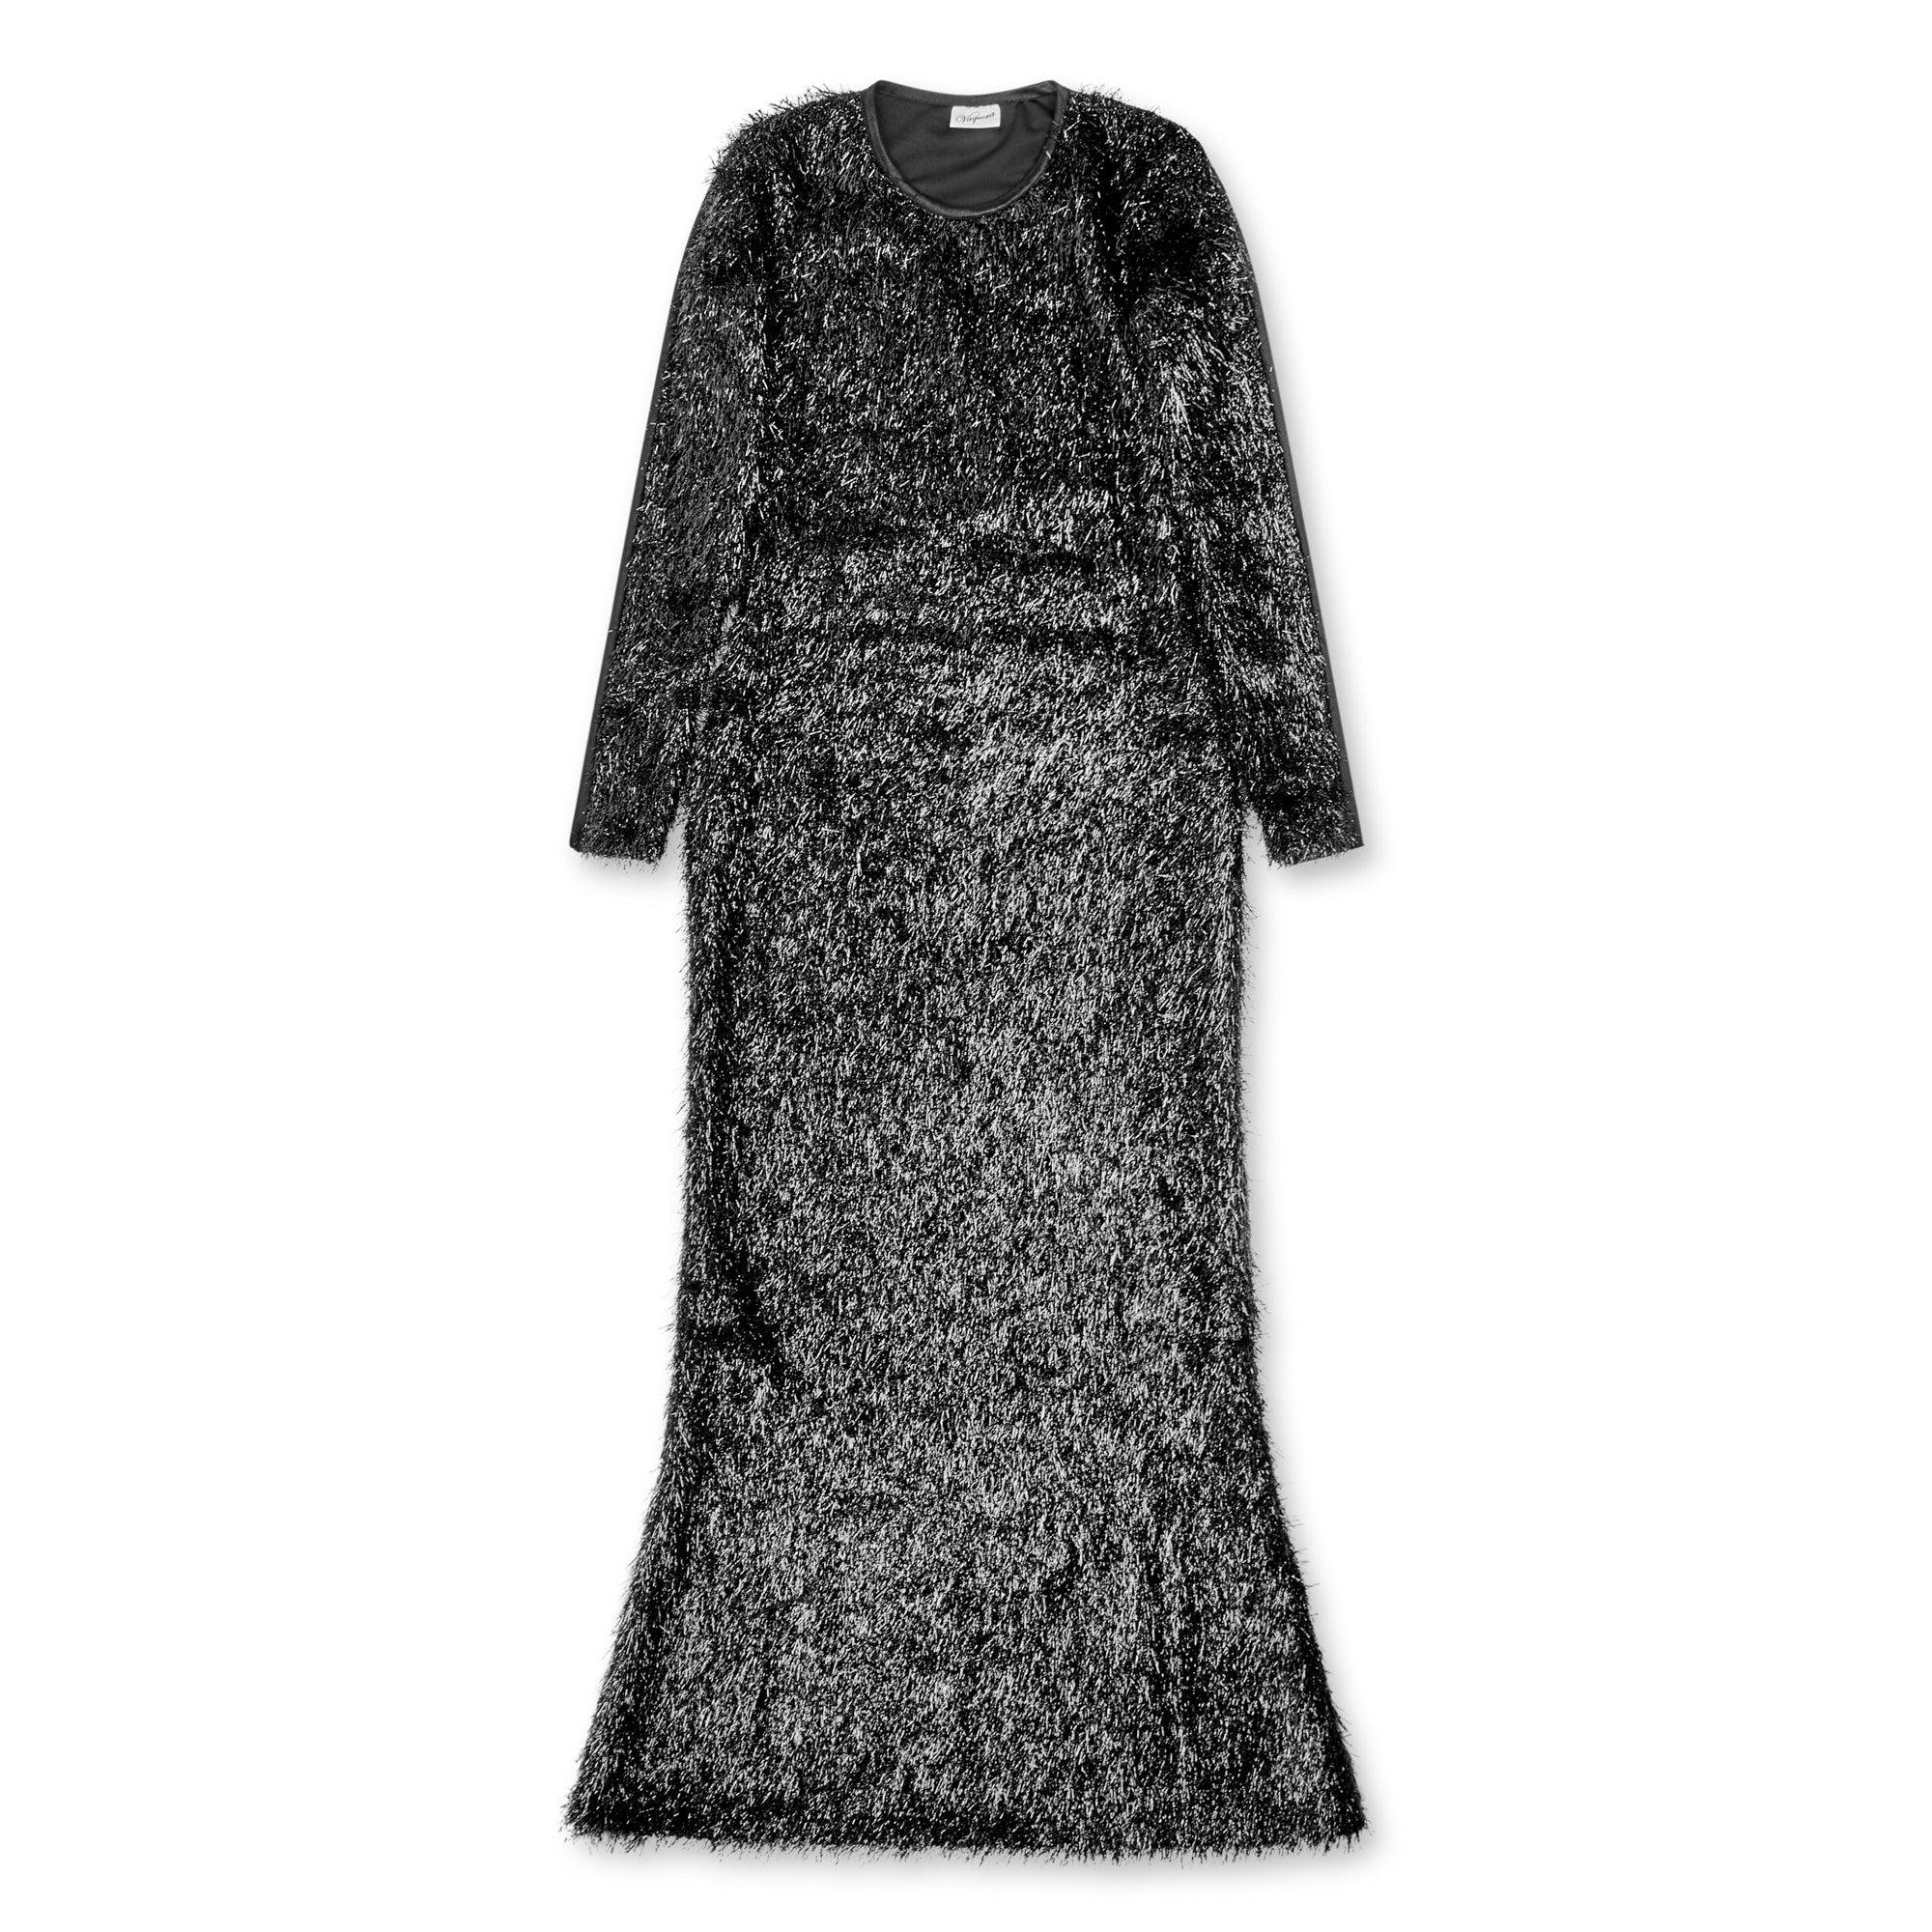 Vaquera - Women’s Frizzy Bodycon Dress - (Black) by VAQUERA